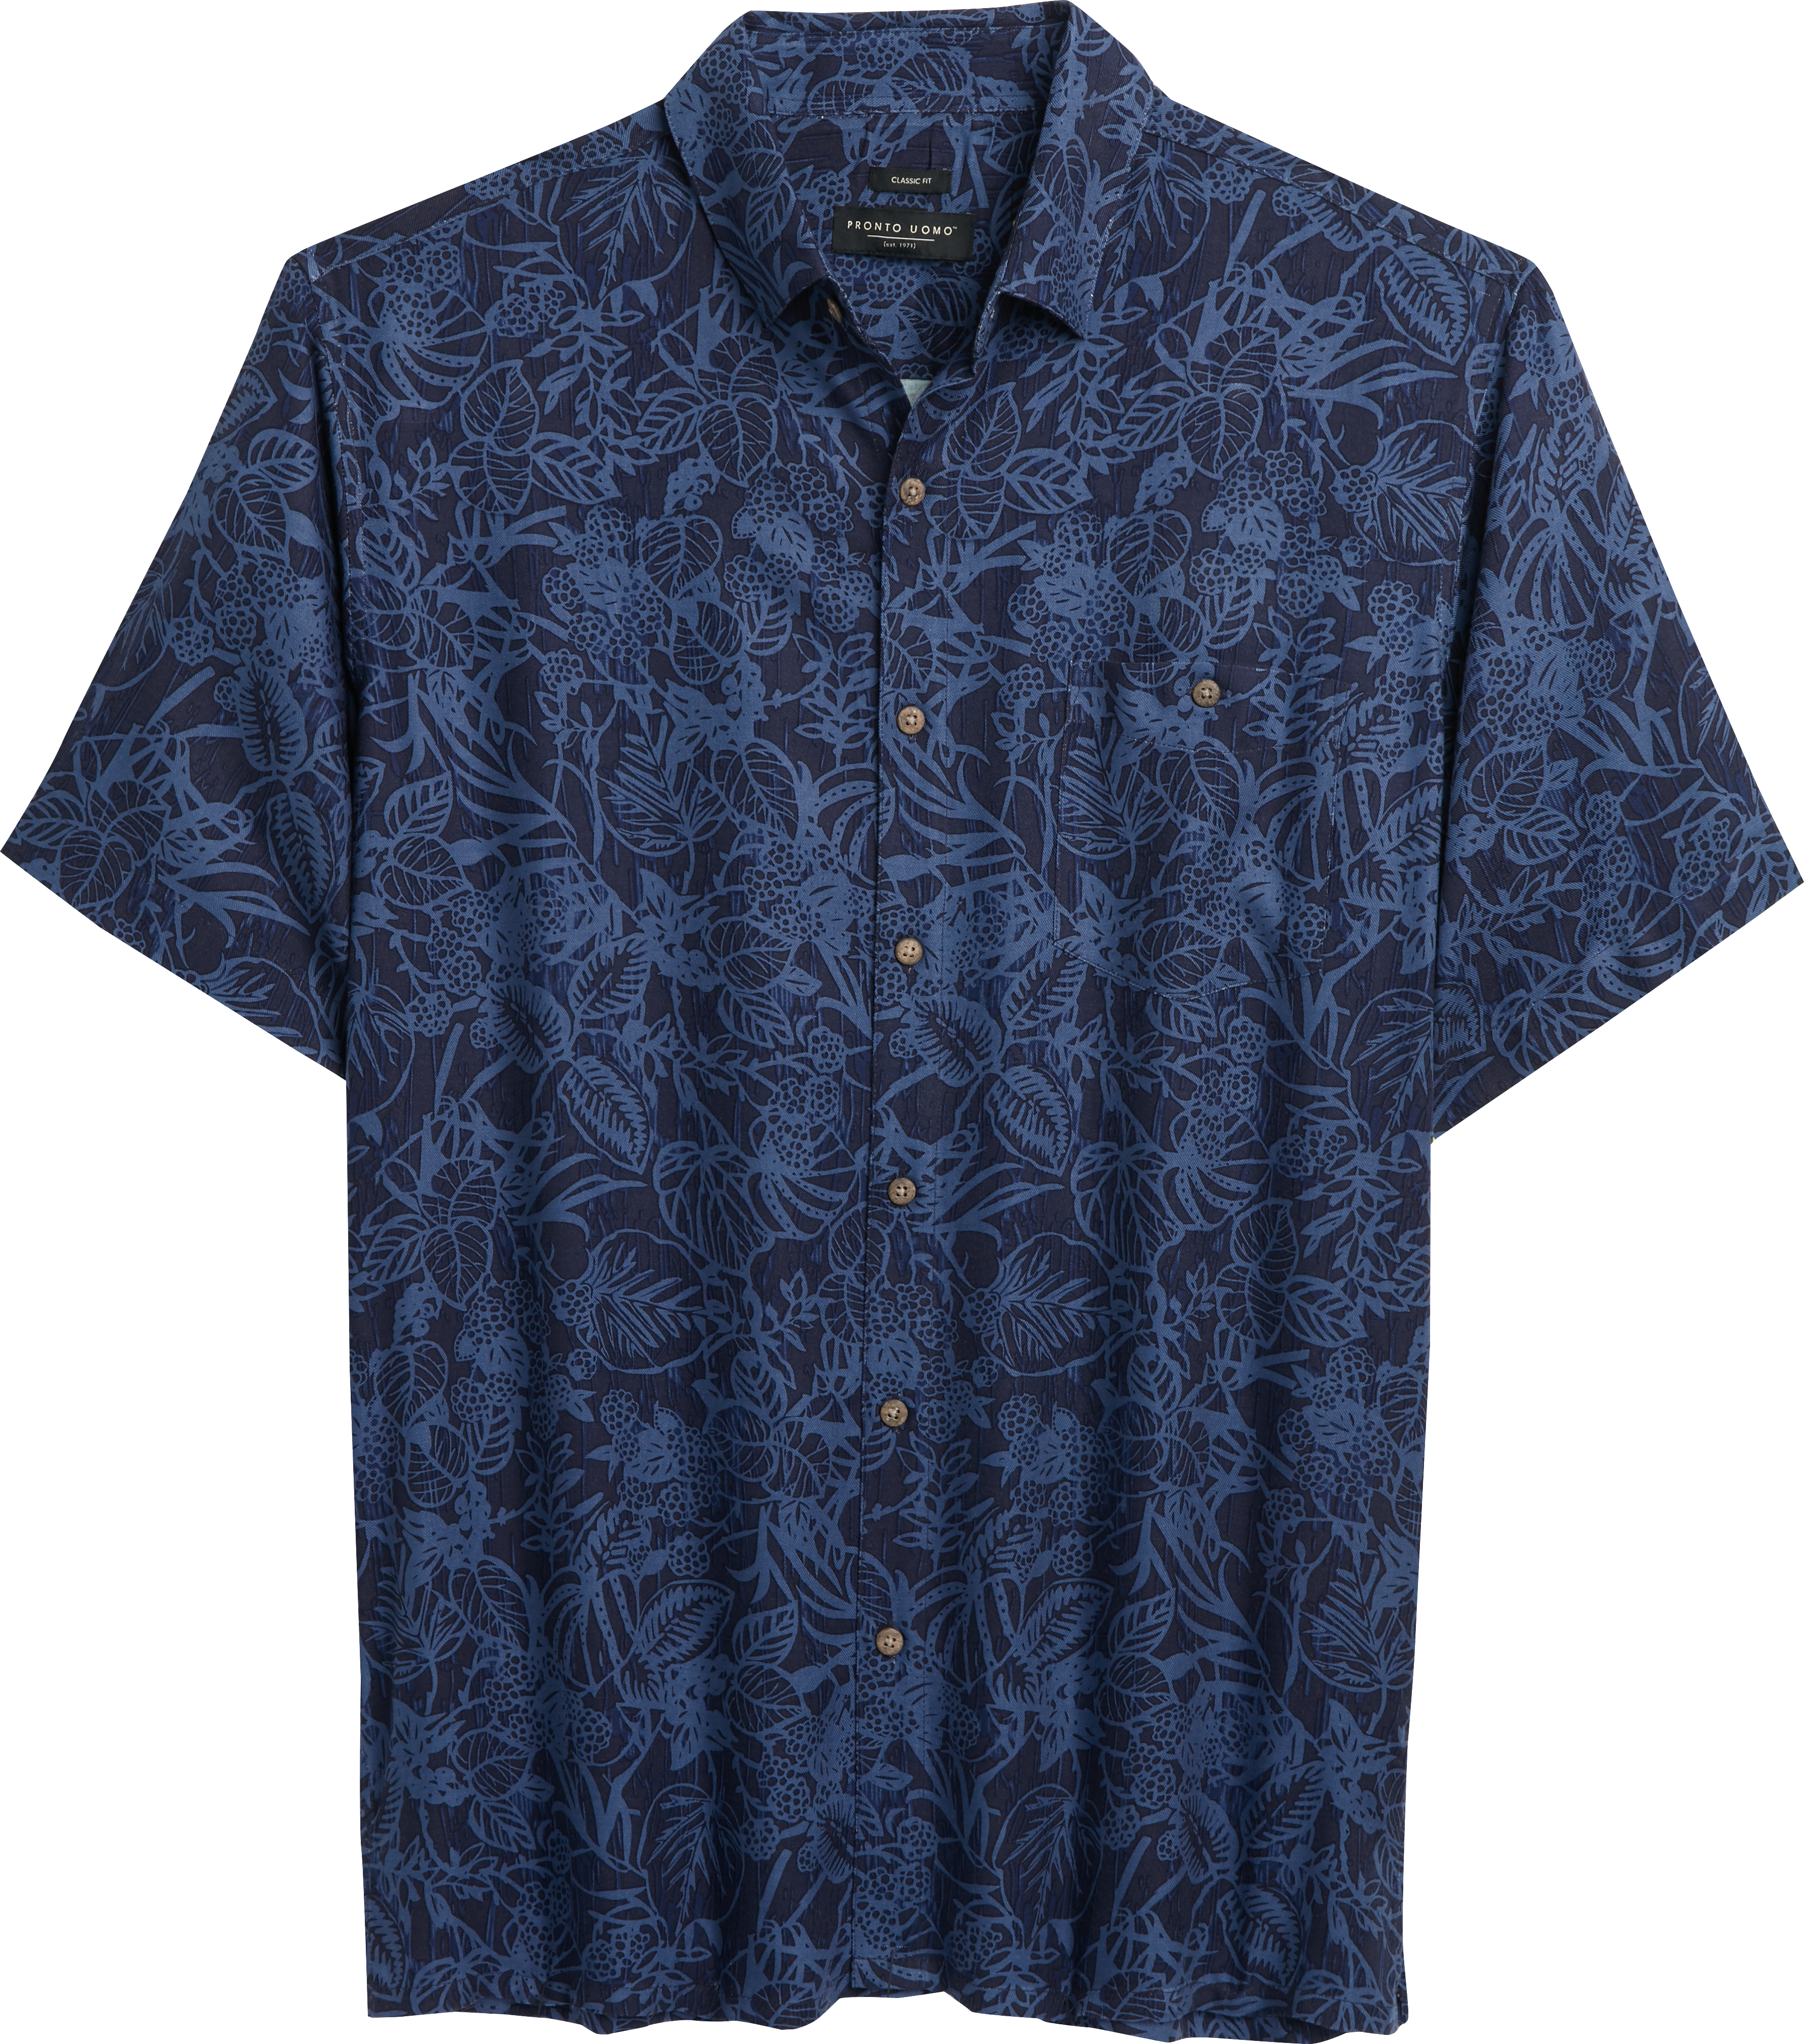 Pronto Uomo Navy Floral Short Sleeve Classic Fit Sport Shirt - Men's ...